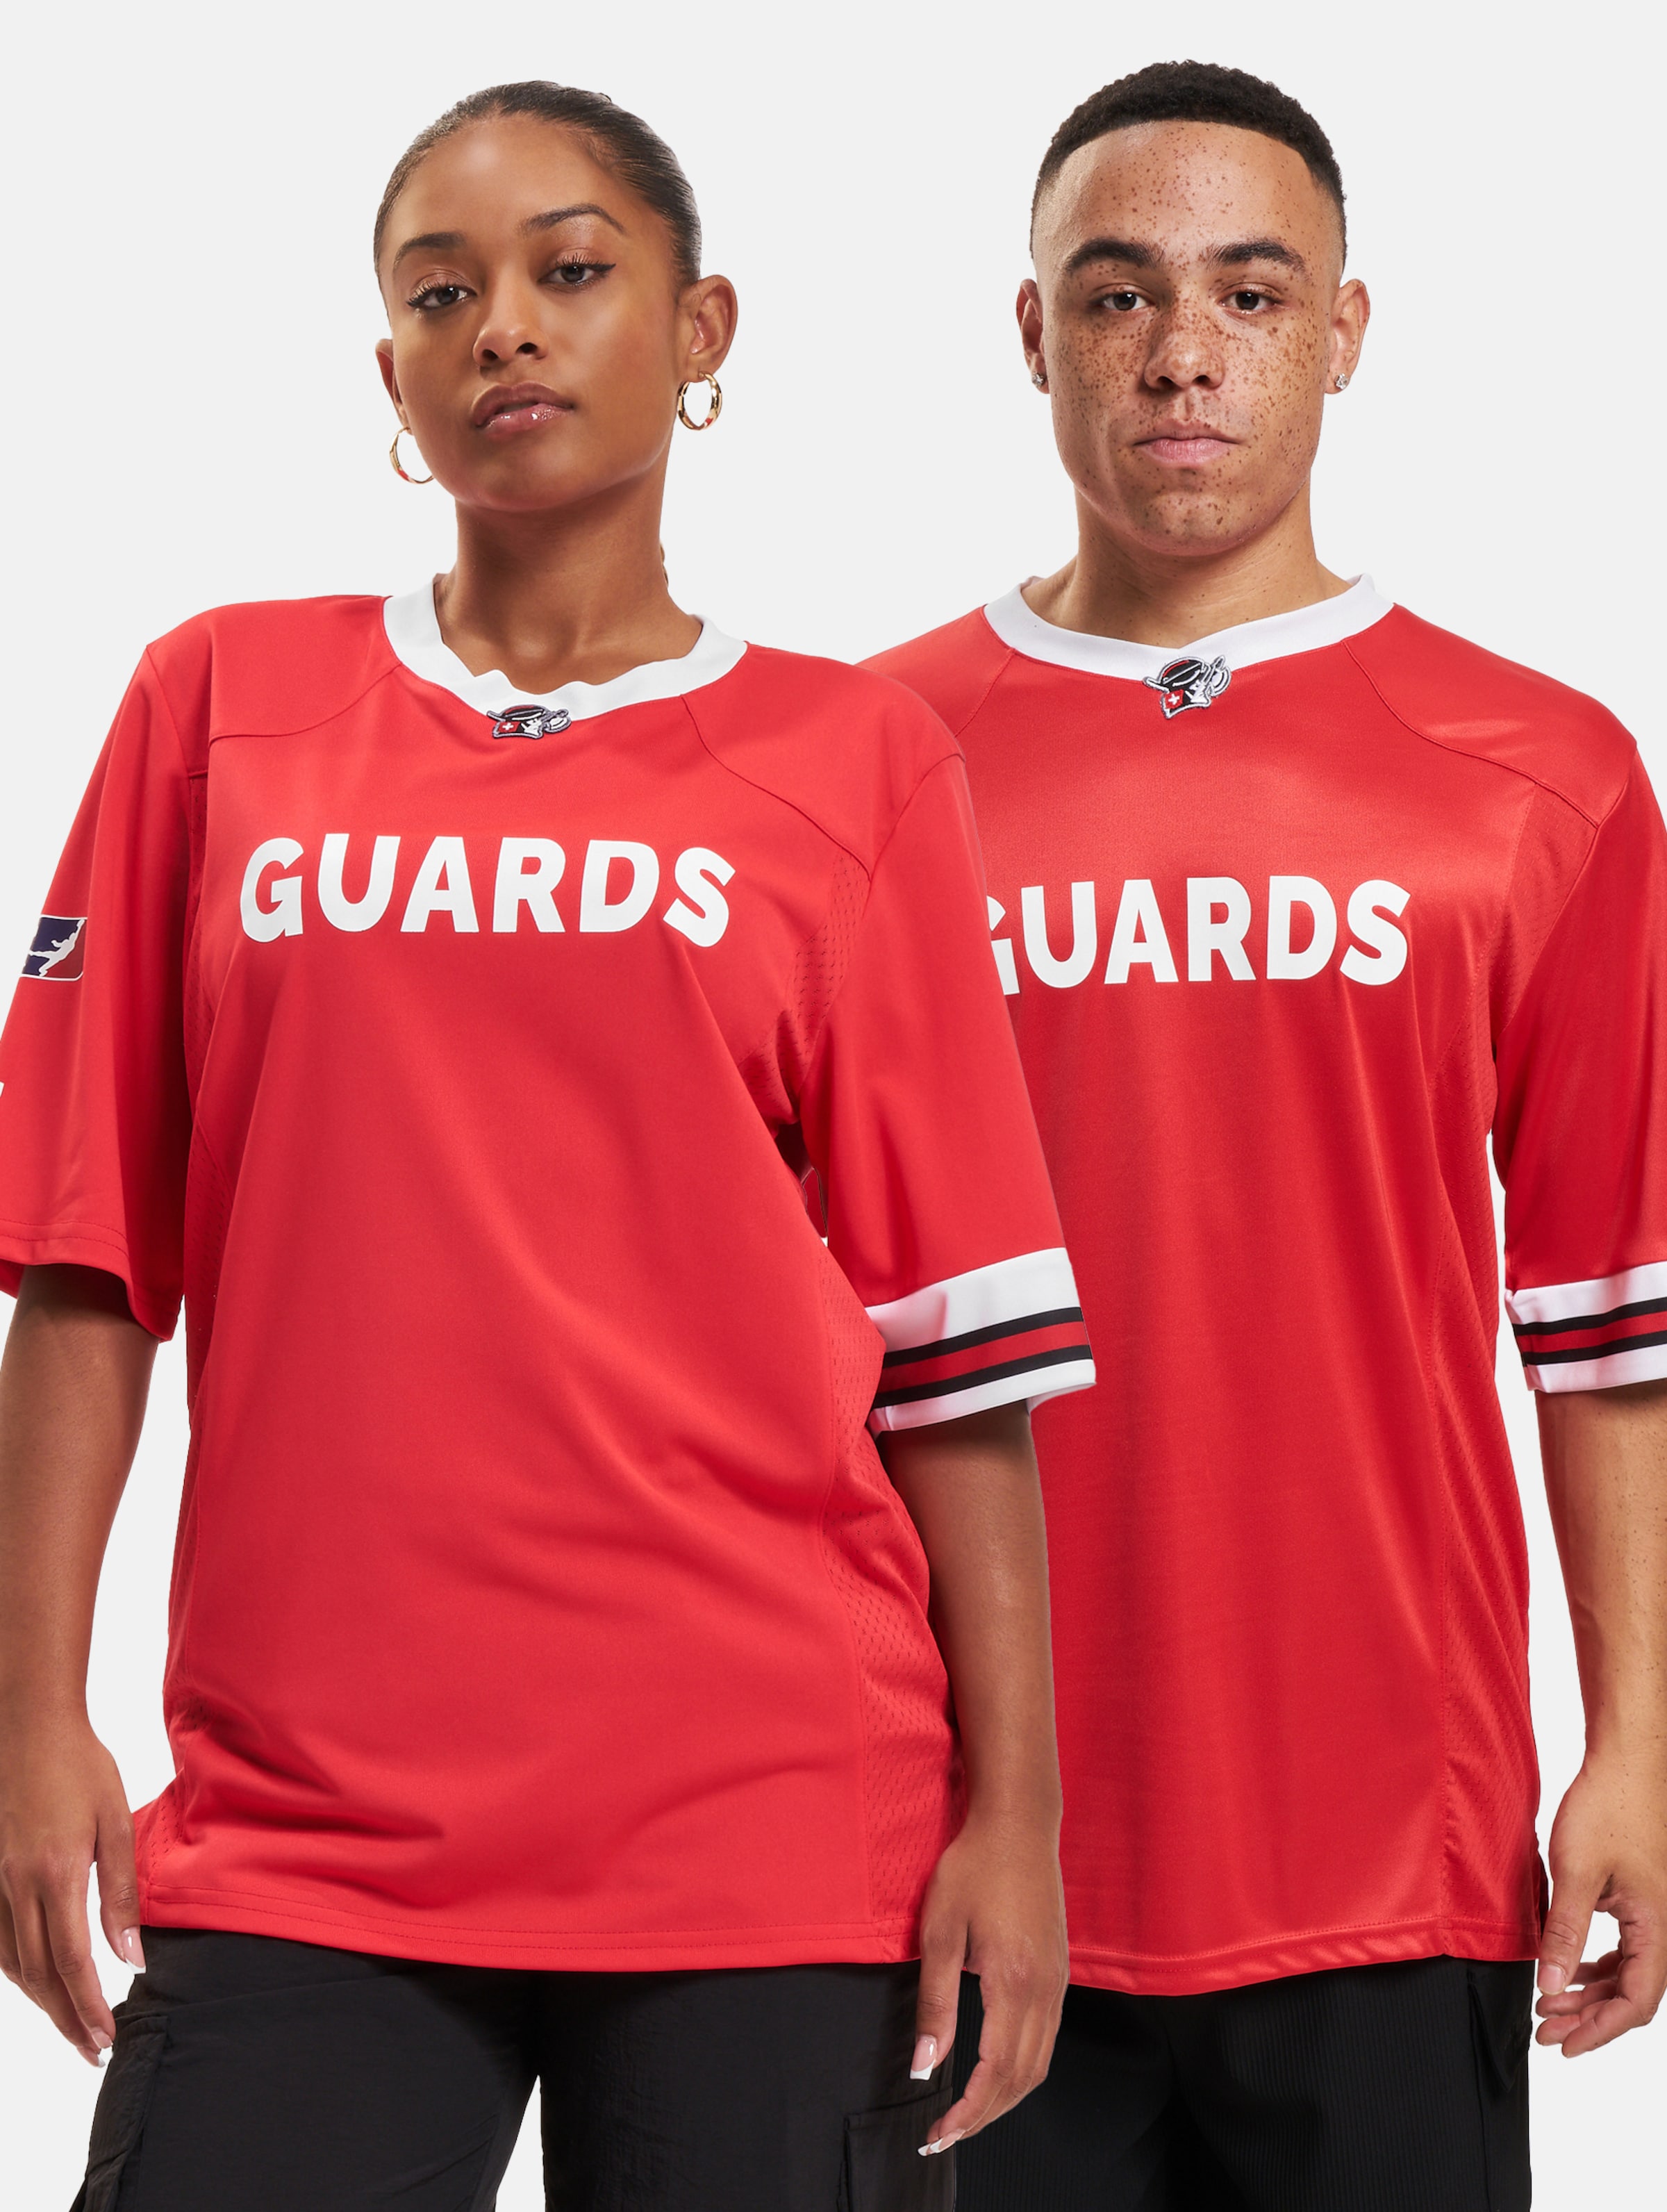 European League Of Football 1018 Helvetic Guards Authentic Game T-Shirt Vrouwen op kleur rood, Maat XL